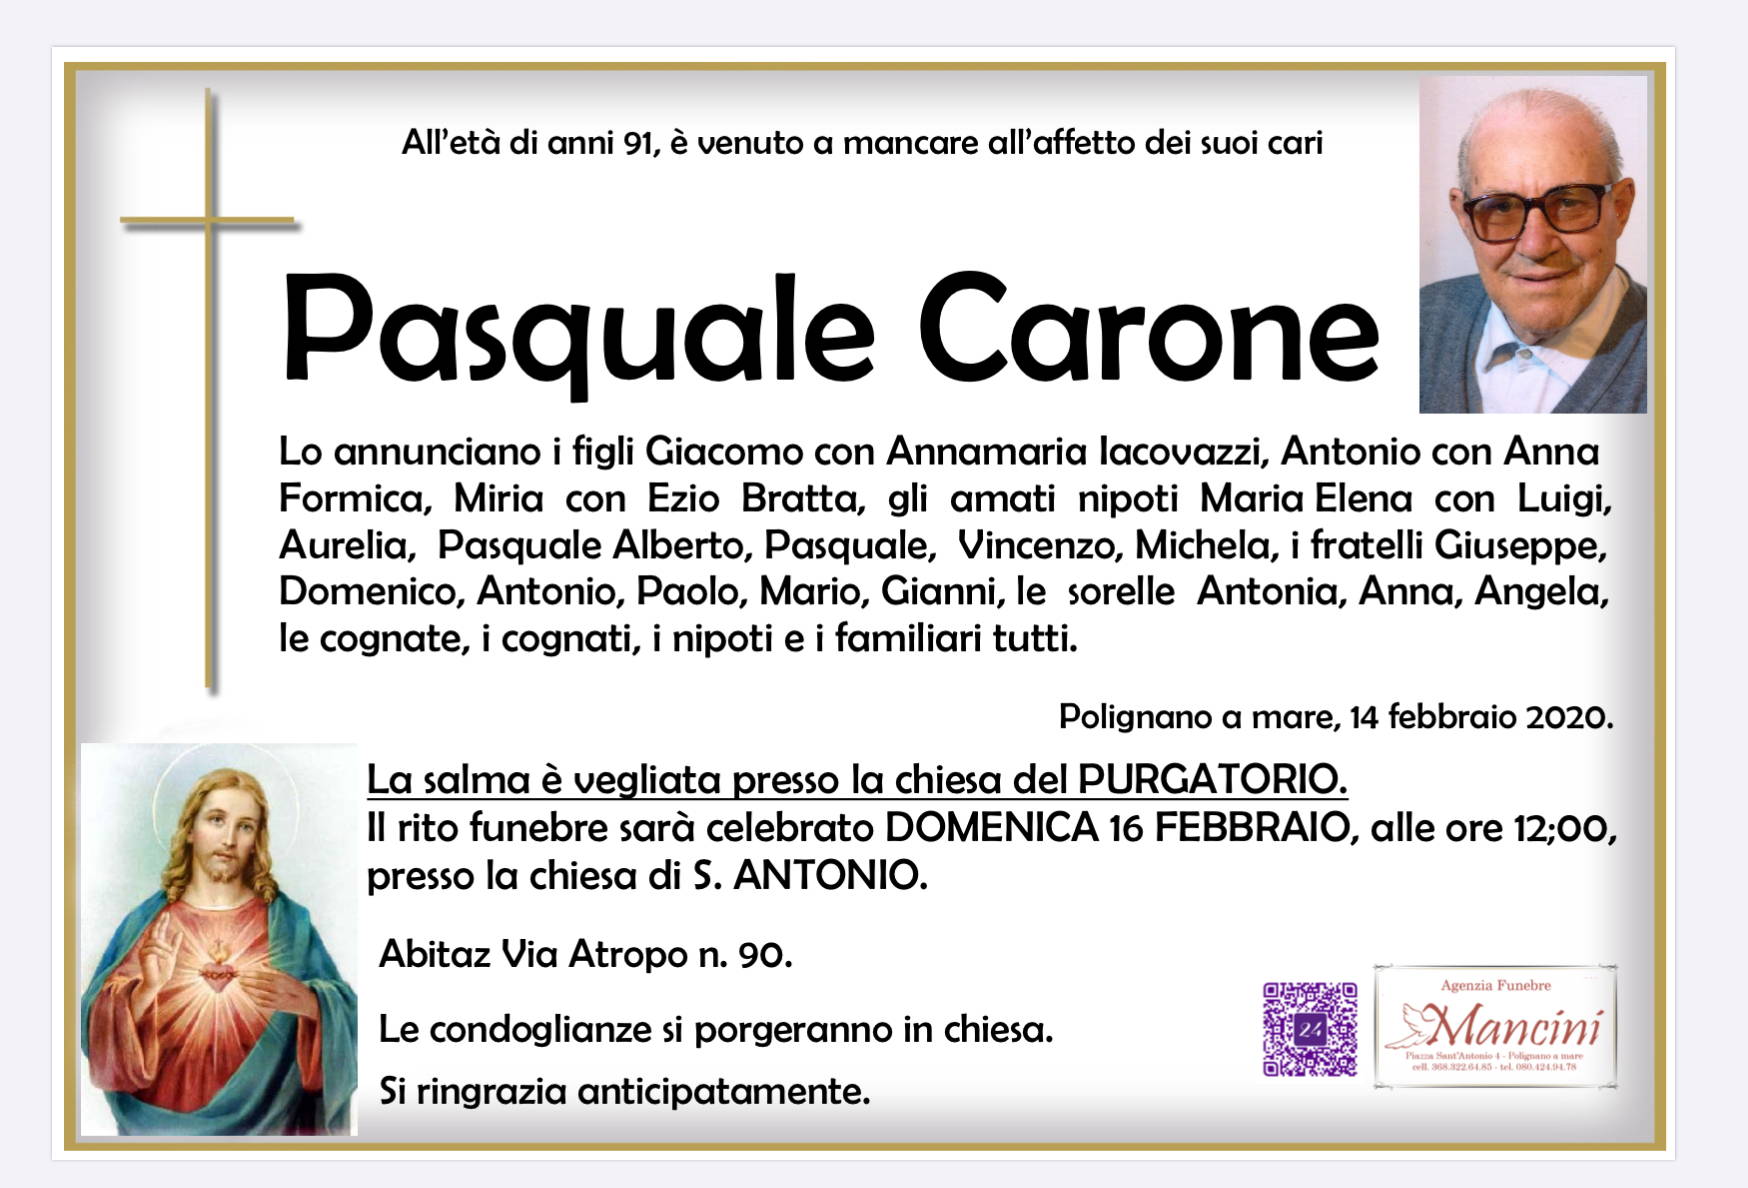 Pasquale Carone